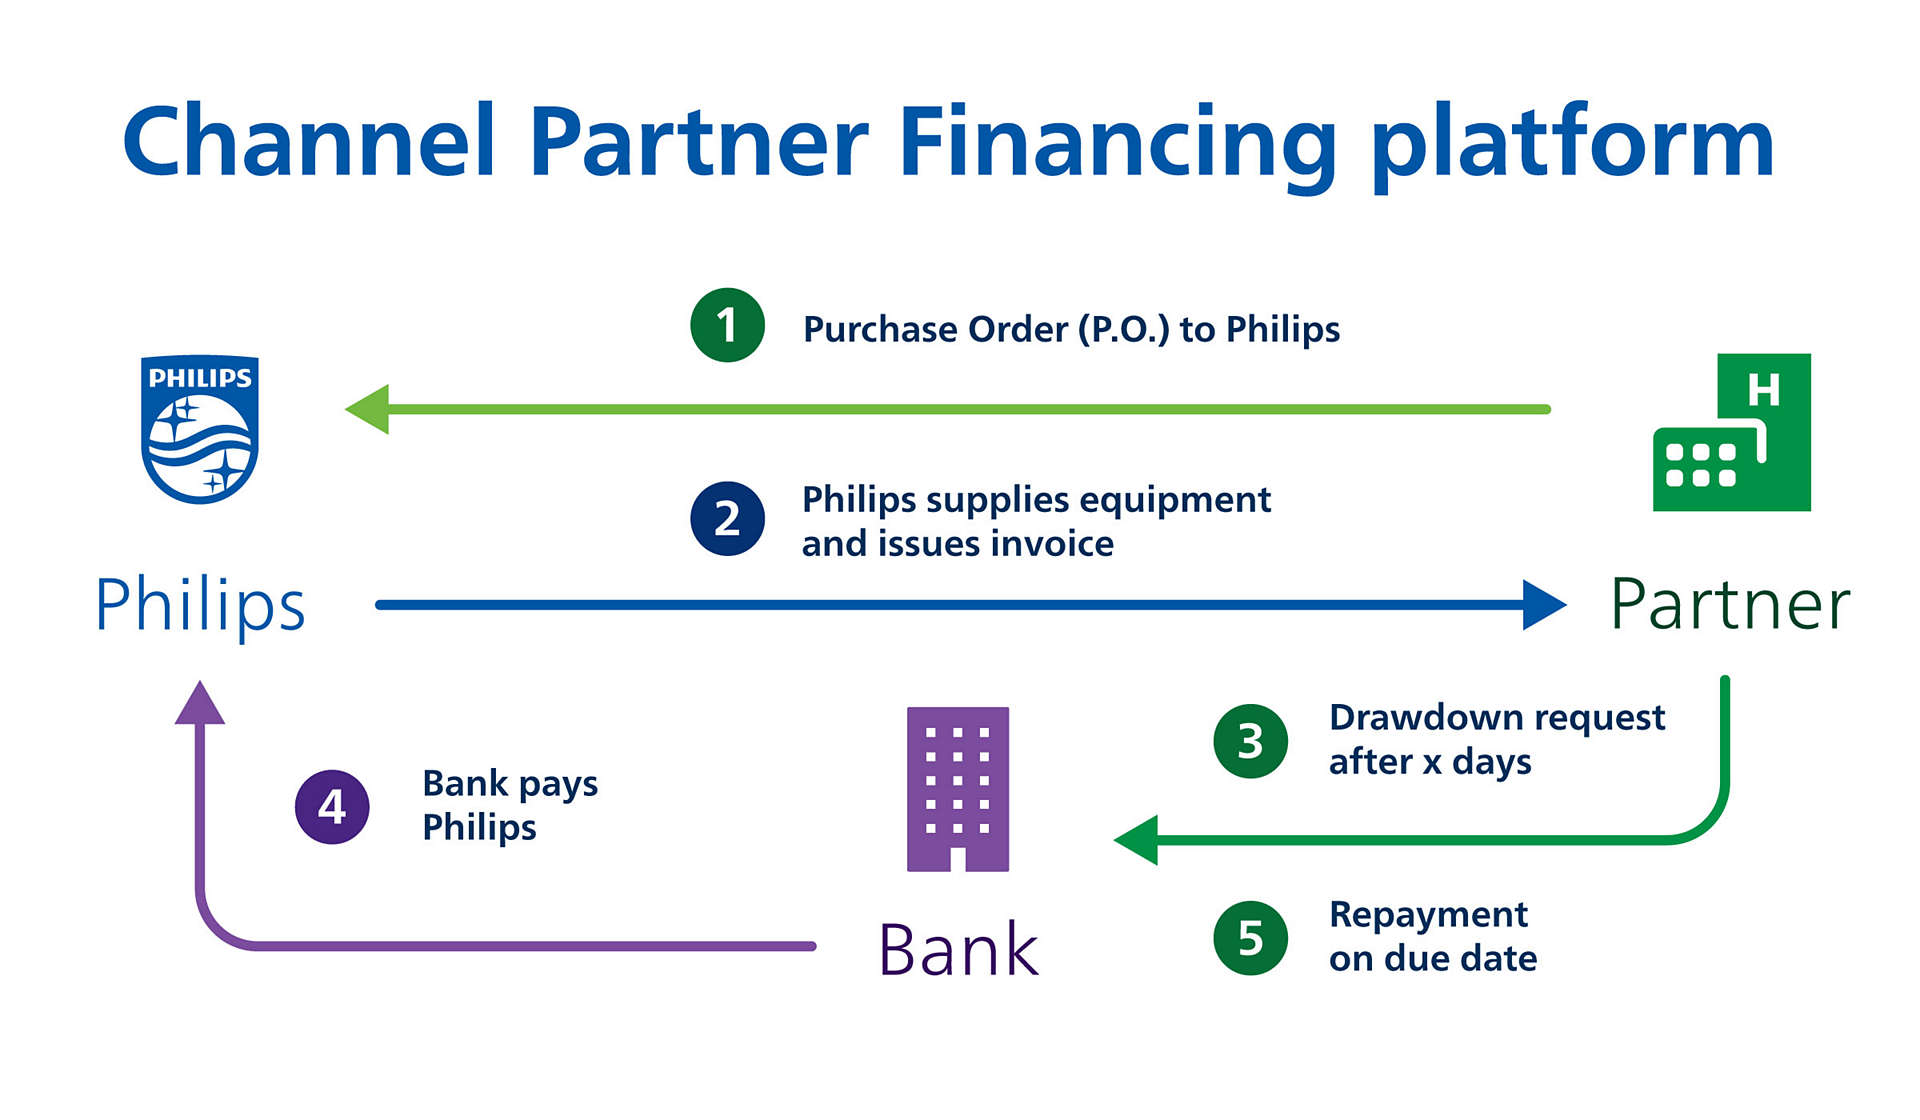 Channel Partner Finance structure